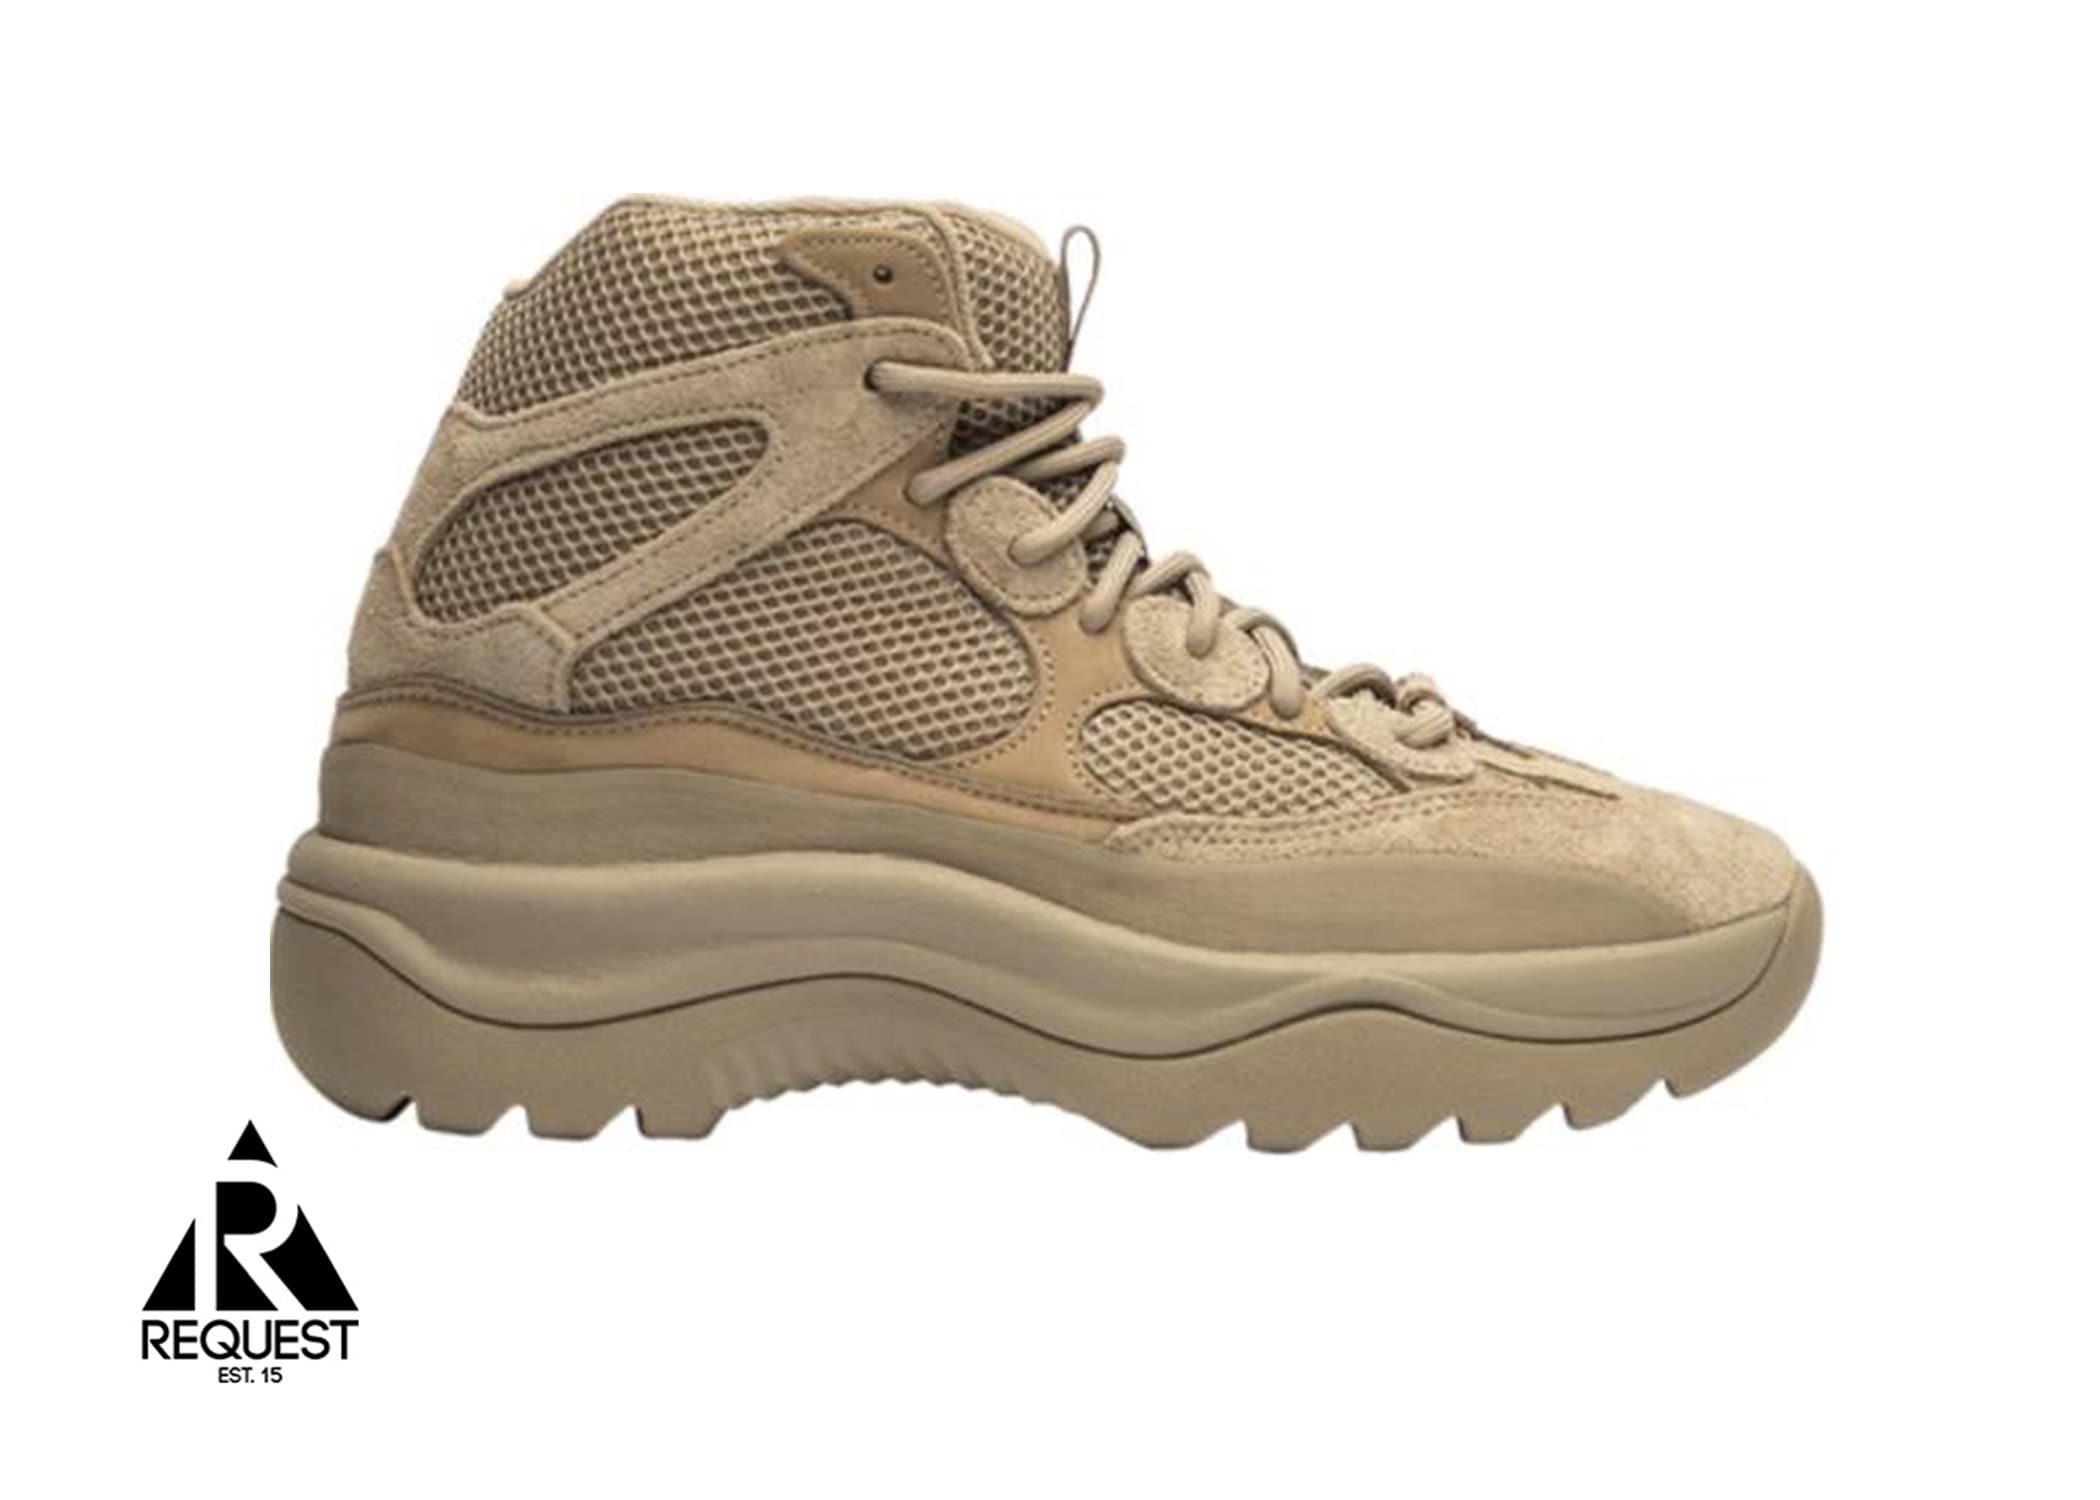 Adidas Yeezy Desert Boot “Rock”